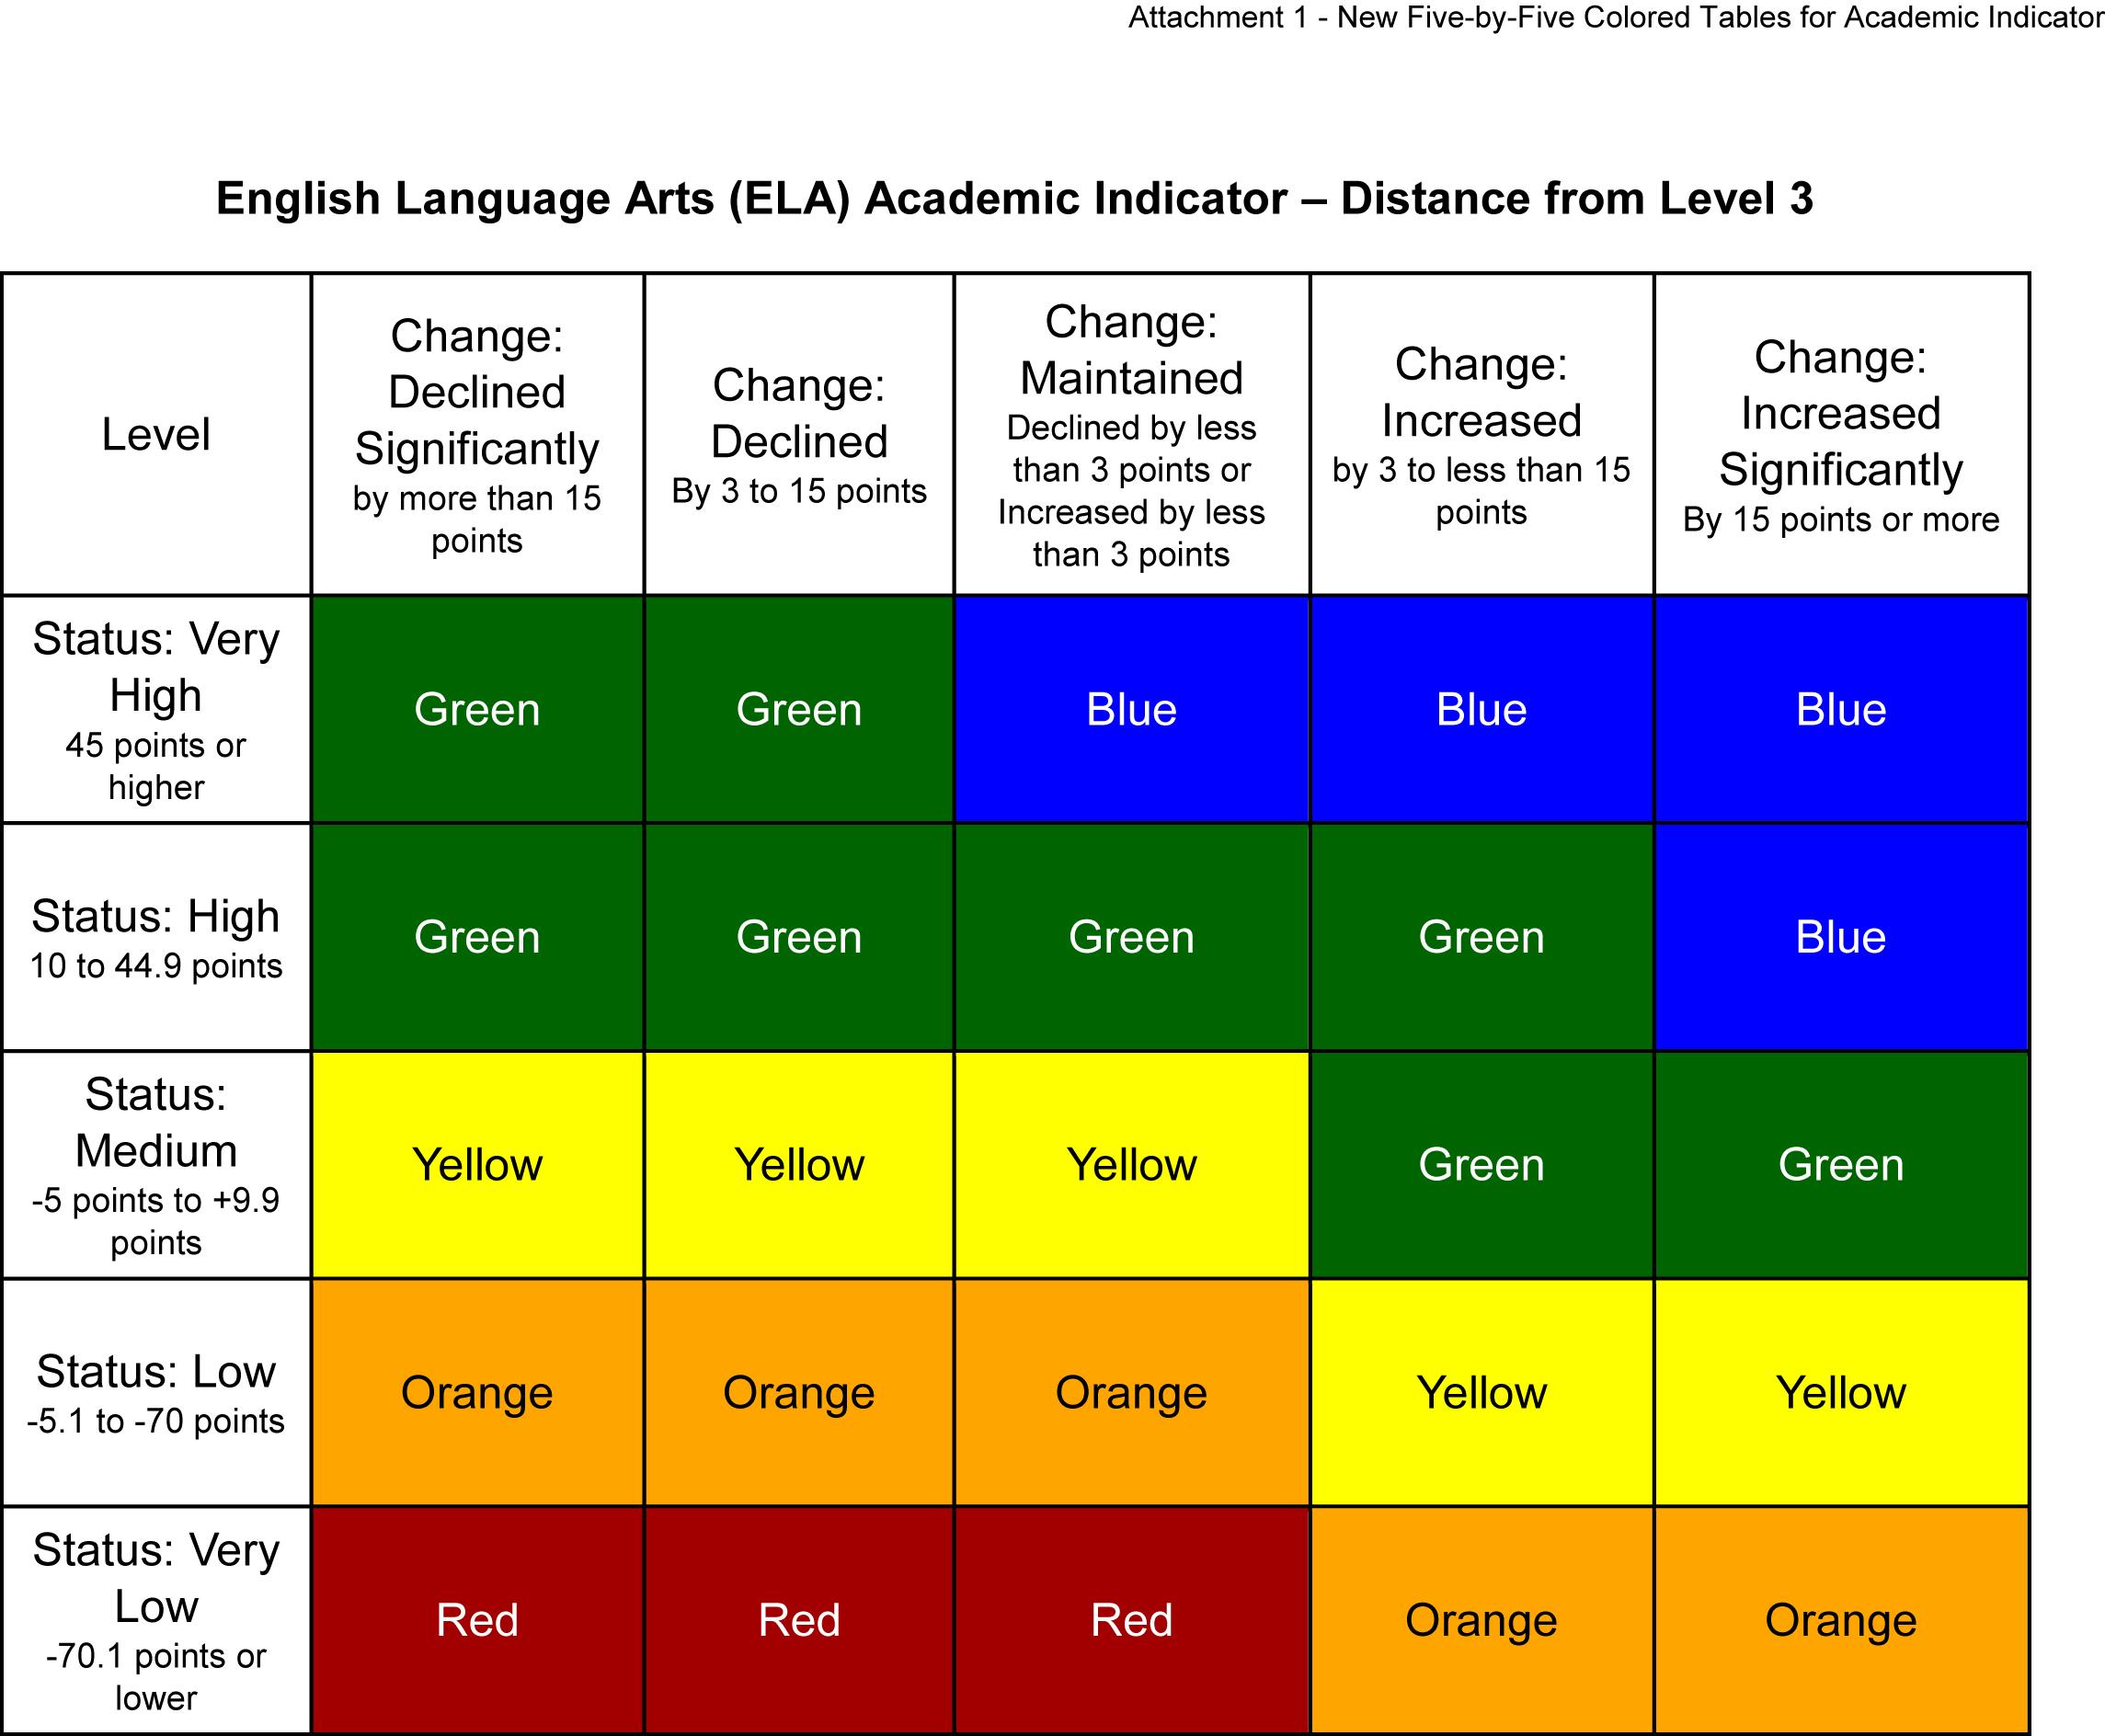 Figure 1. English Language Arts Academic Indicator, Dashboard 5 x 5.